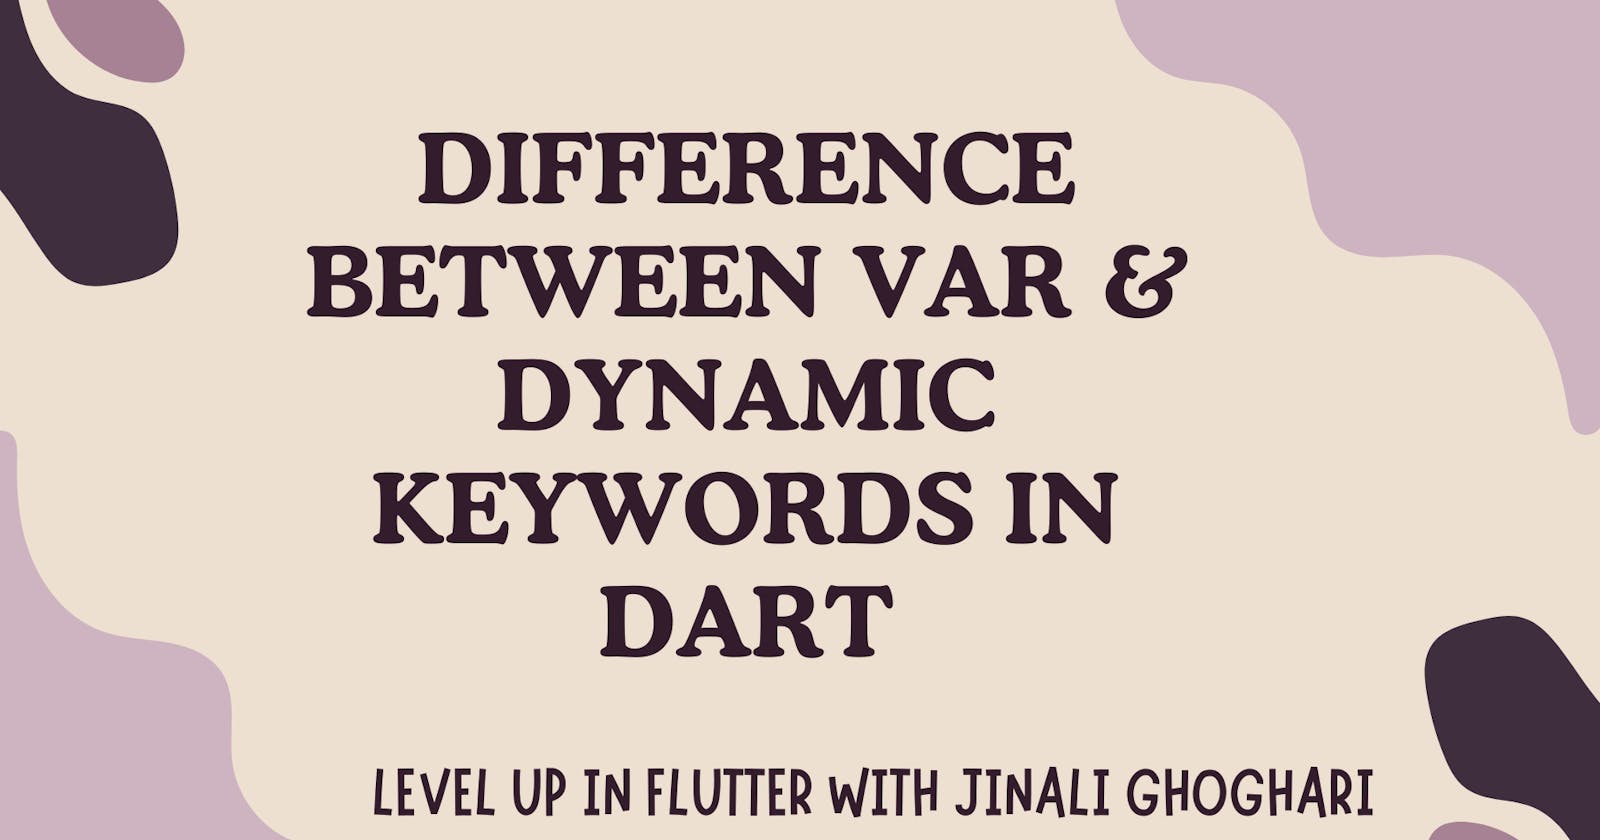 Difference Between var & dynamic keywords in dart